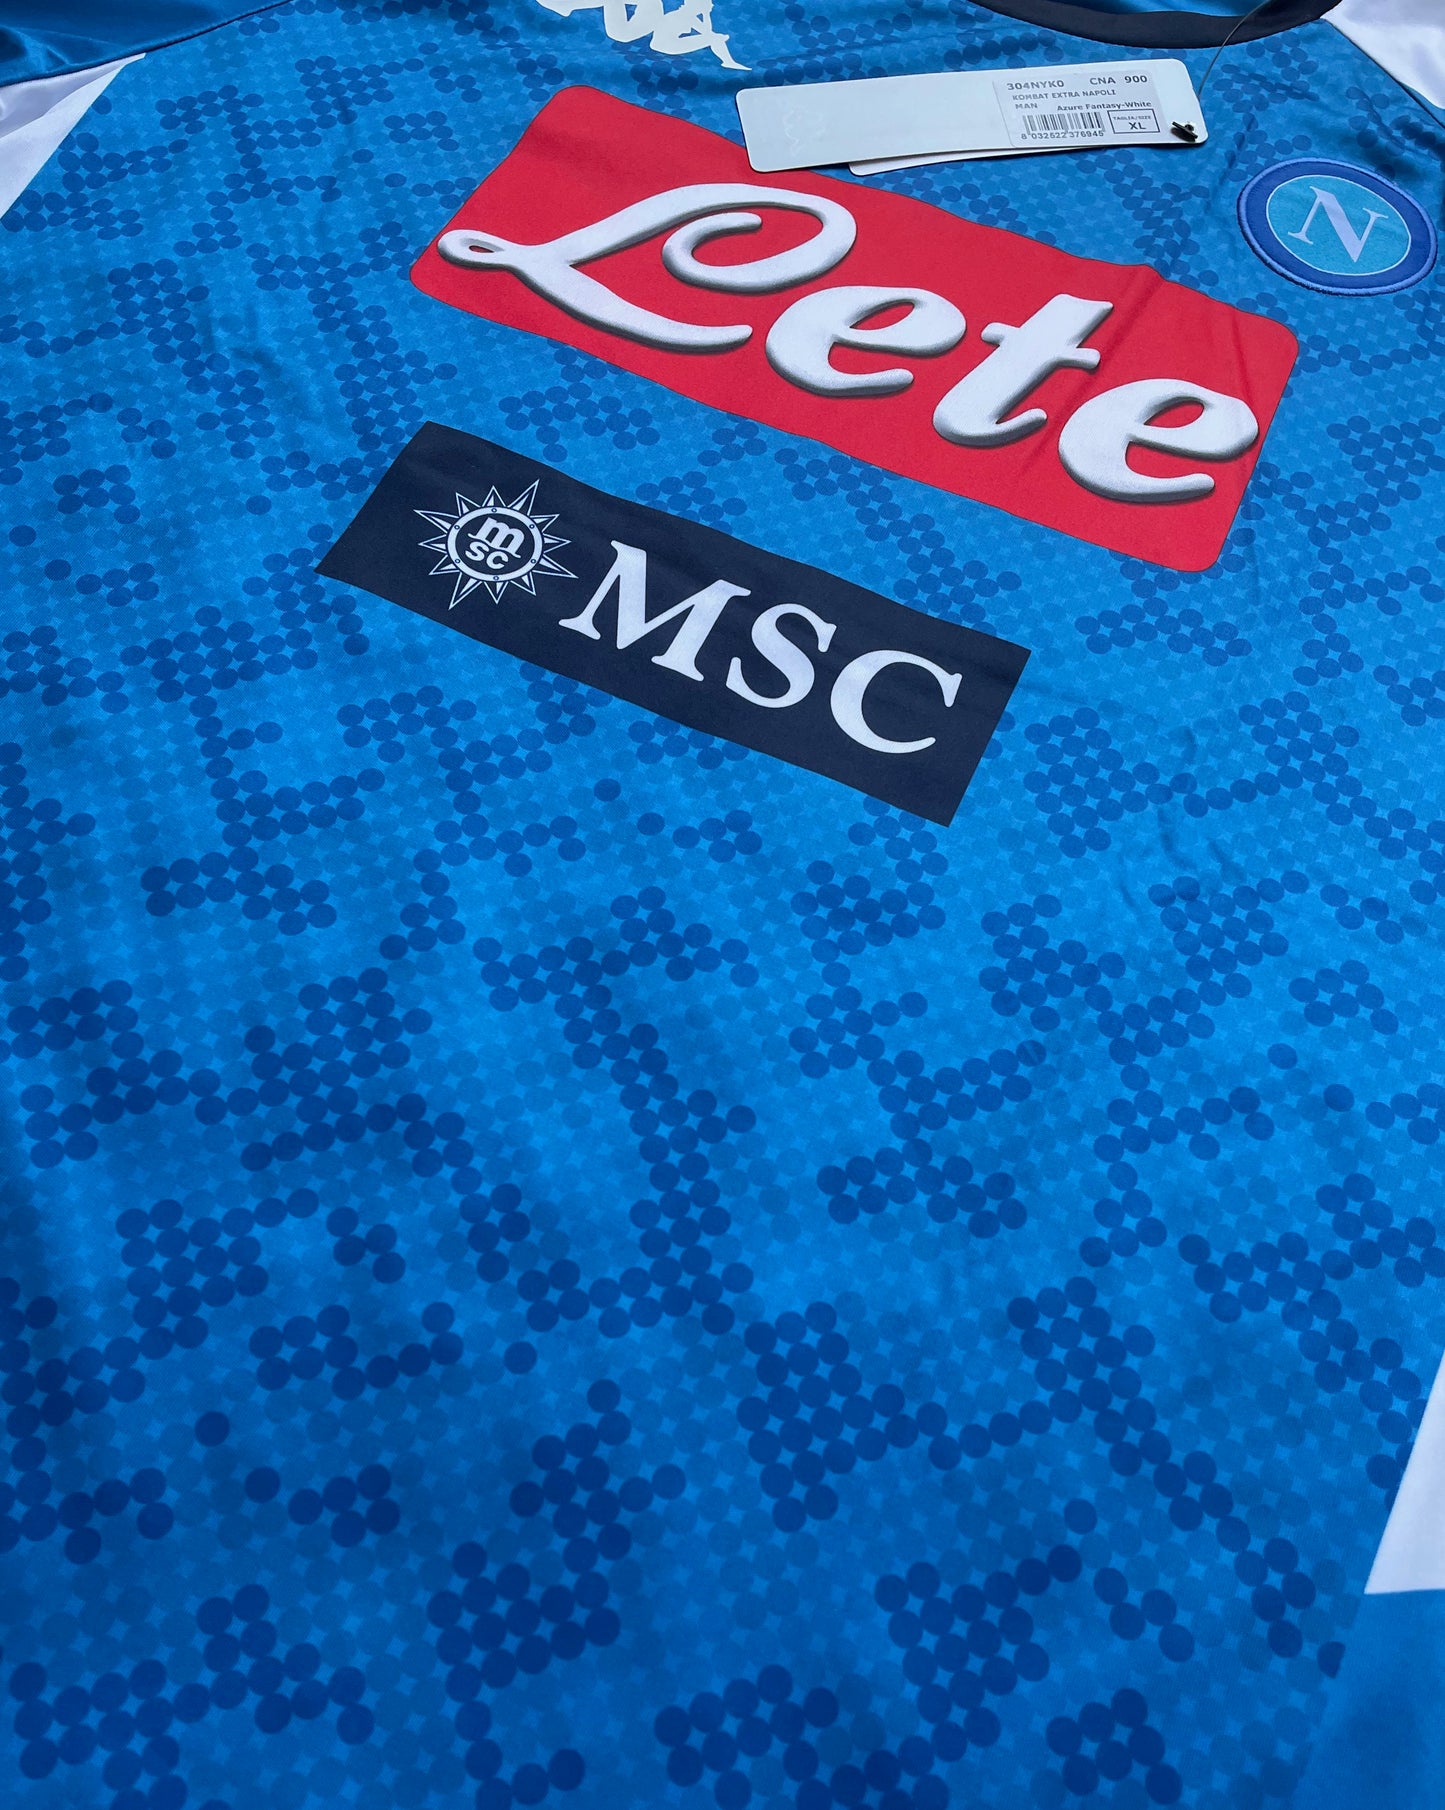 2019-2020 SSC Napoli home shirt (L, XL)